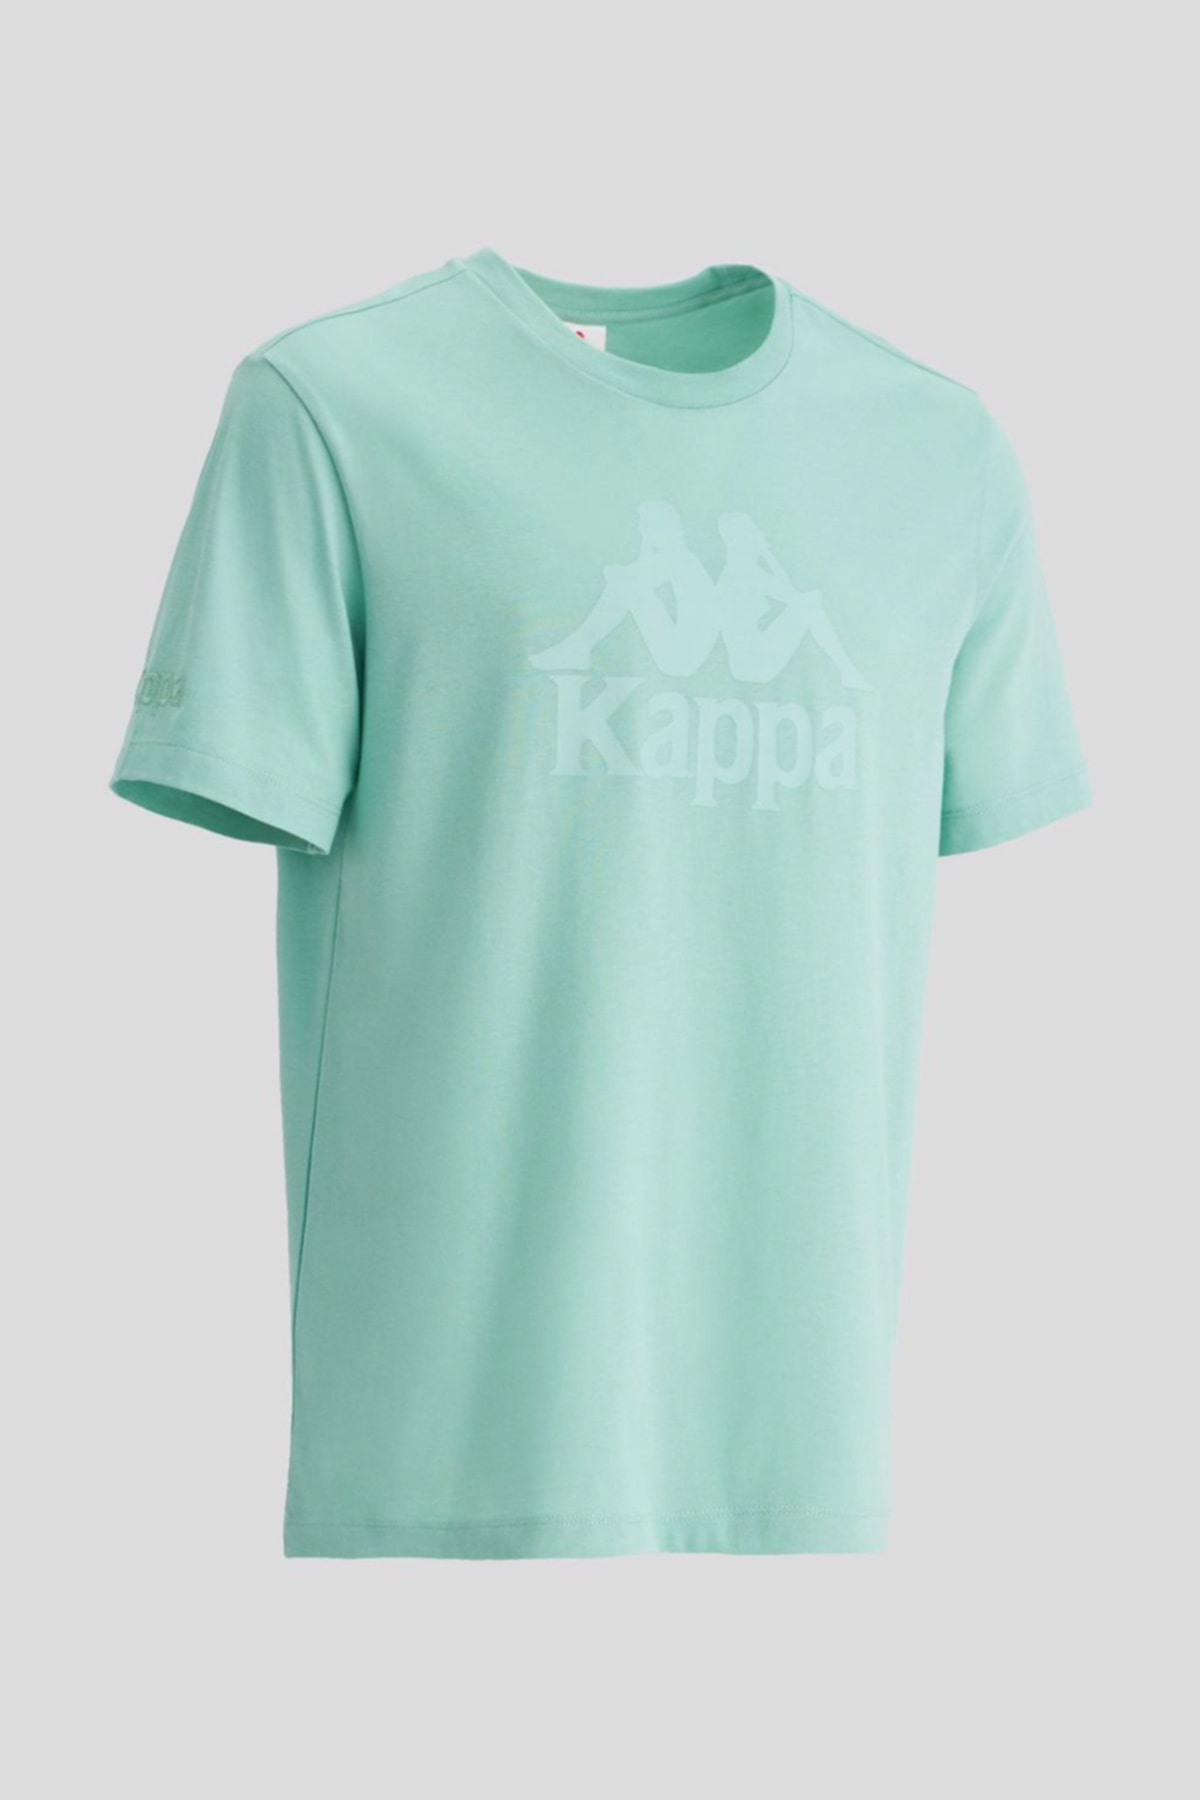 Kappa تی شرت معمولی مردانه آب سبز Tahitix معتبر